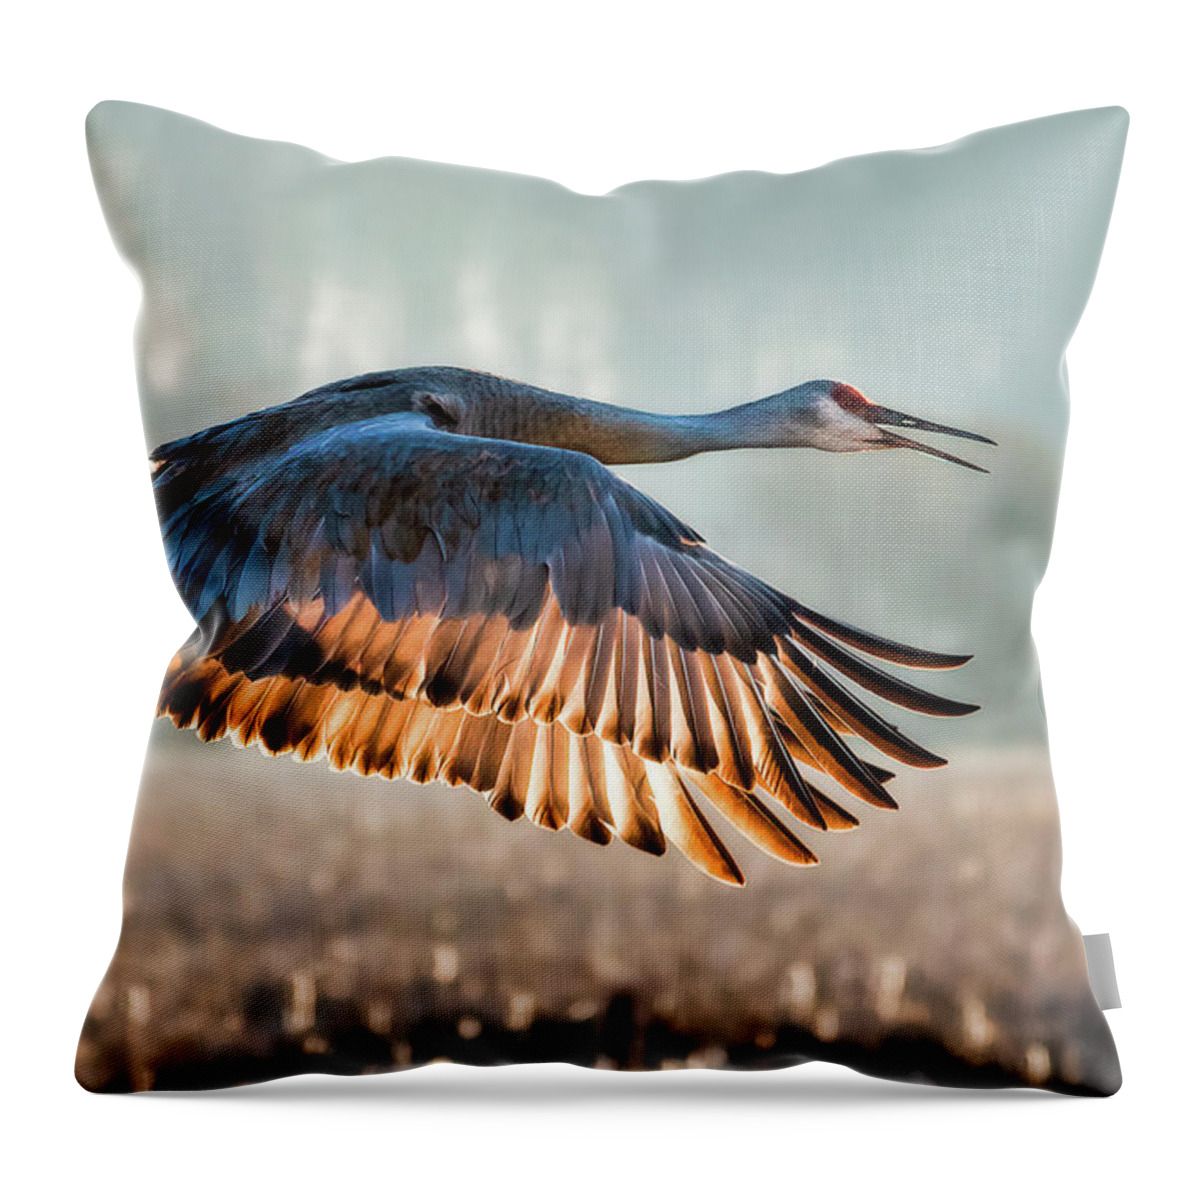 Crane Throw Pillow featuring the photograph Morning Flight by Brad Bellisle